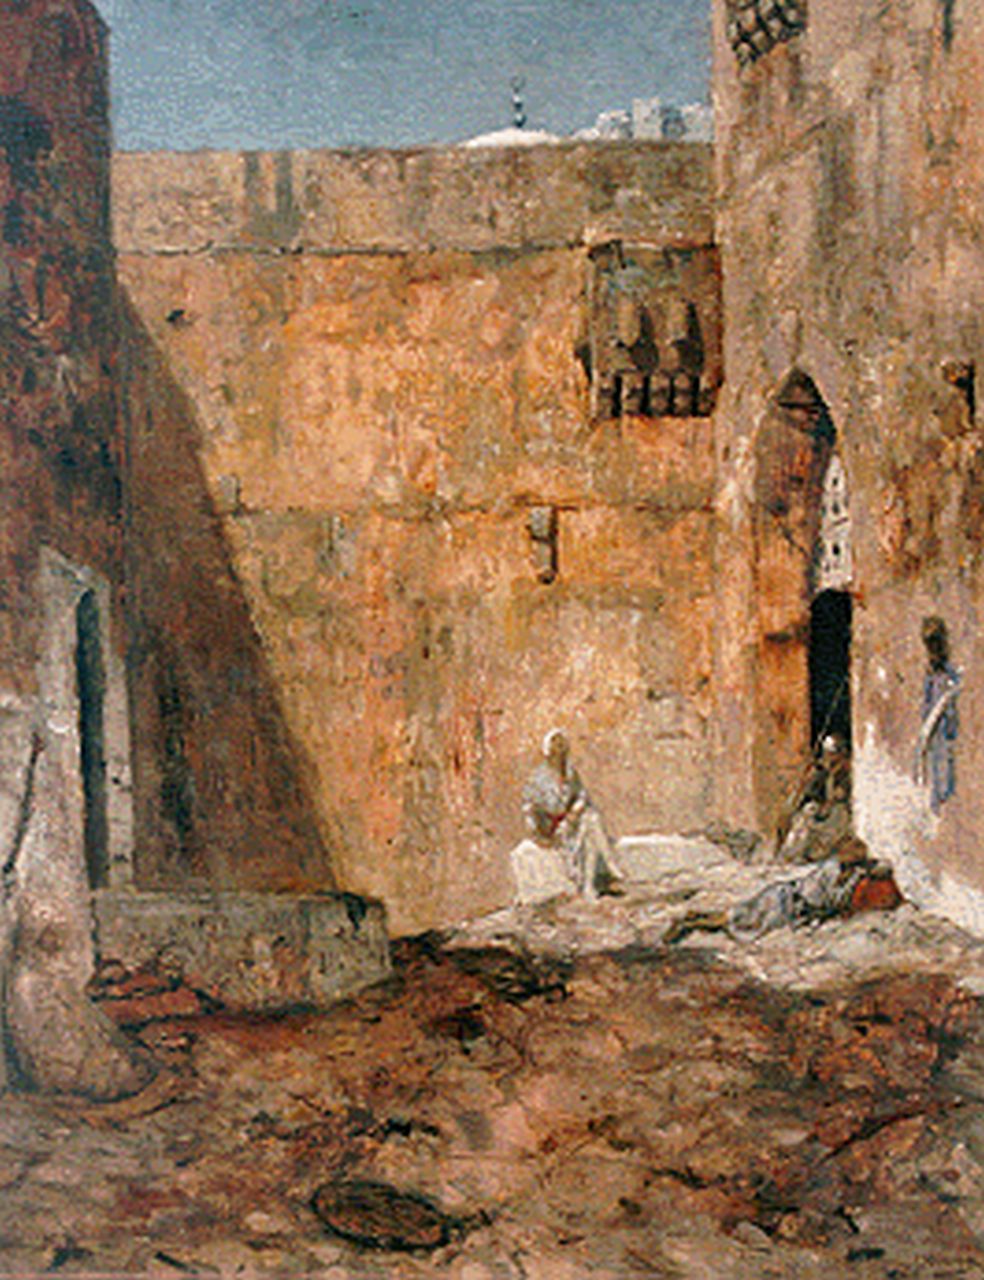 Bauer M.A.J.  | 'Marius' Alexander Jacques Bauer, Guards on an Eastern courtyard, Öl auf Leinwand 75,0 x 60,0 cm, signed l.r.